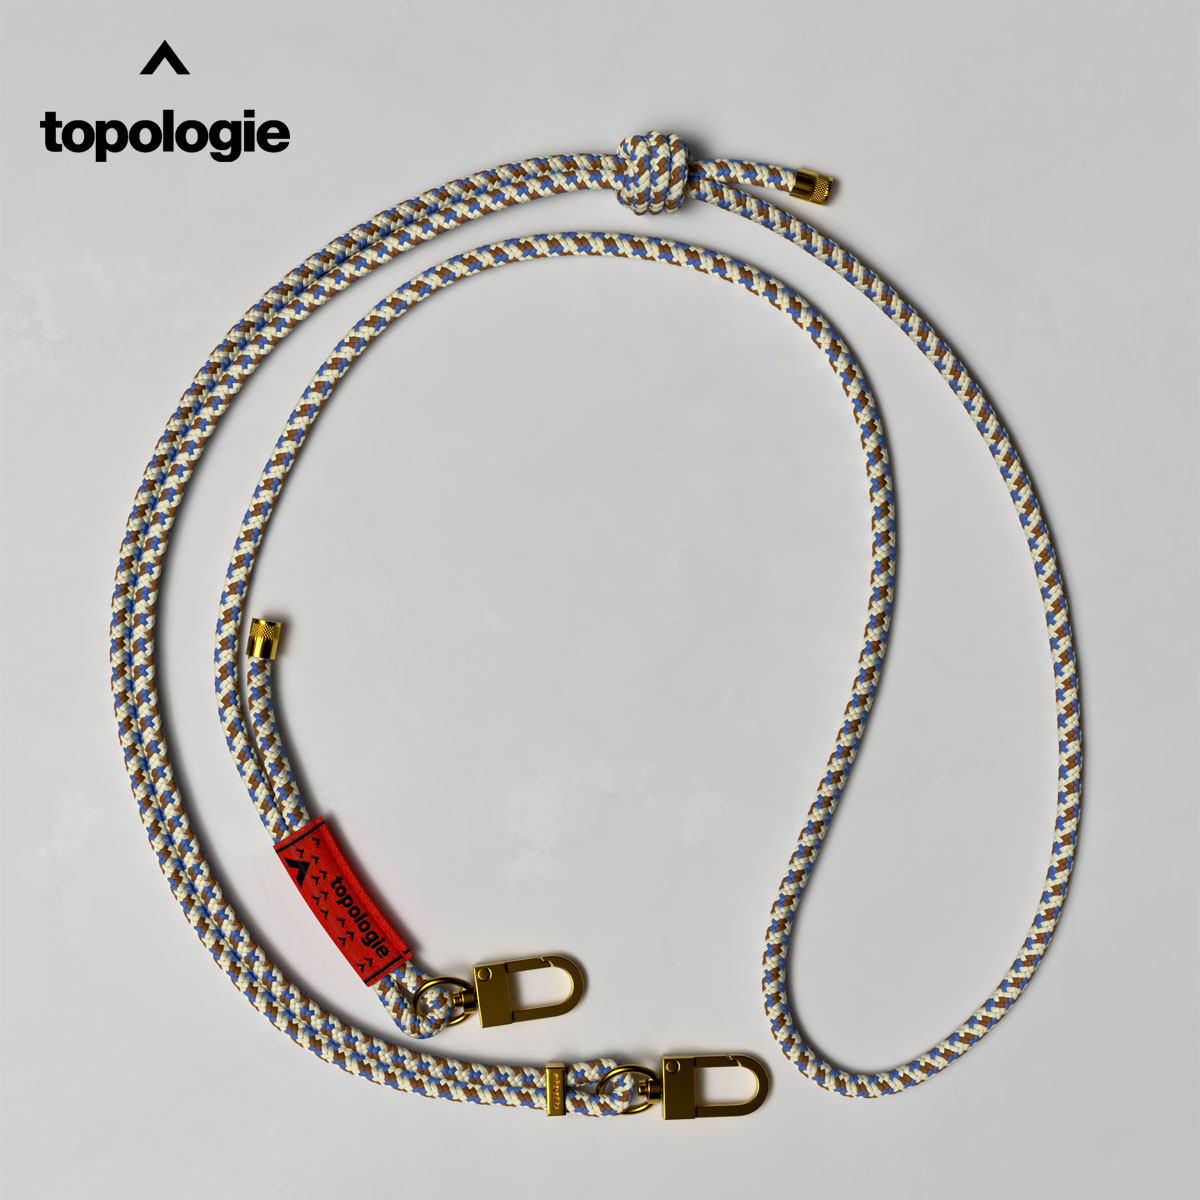 topologie(トポロジー) 6.0mm Rope    Beige Purple